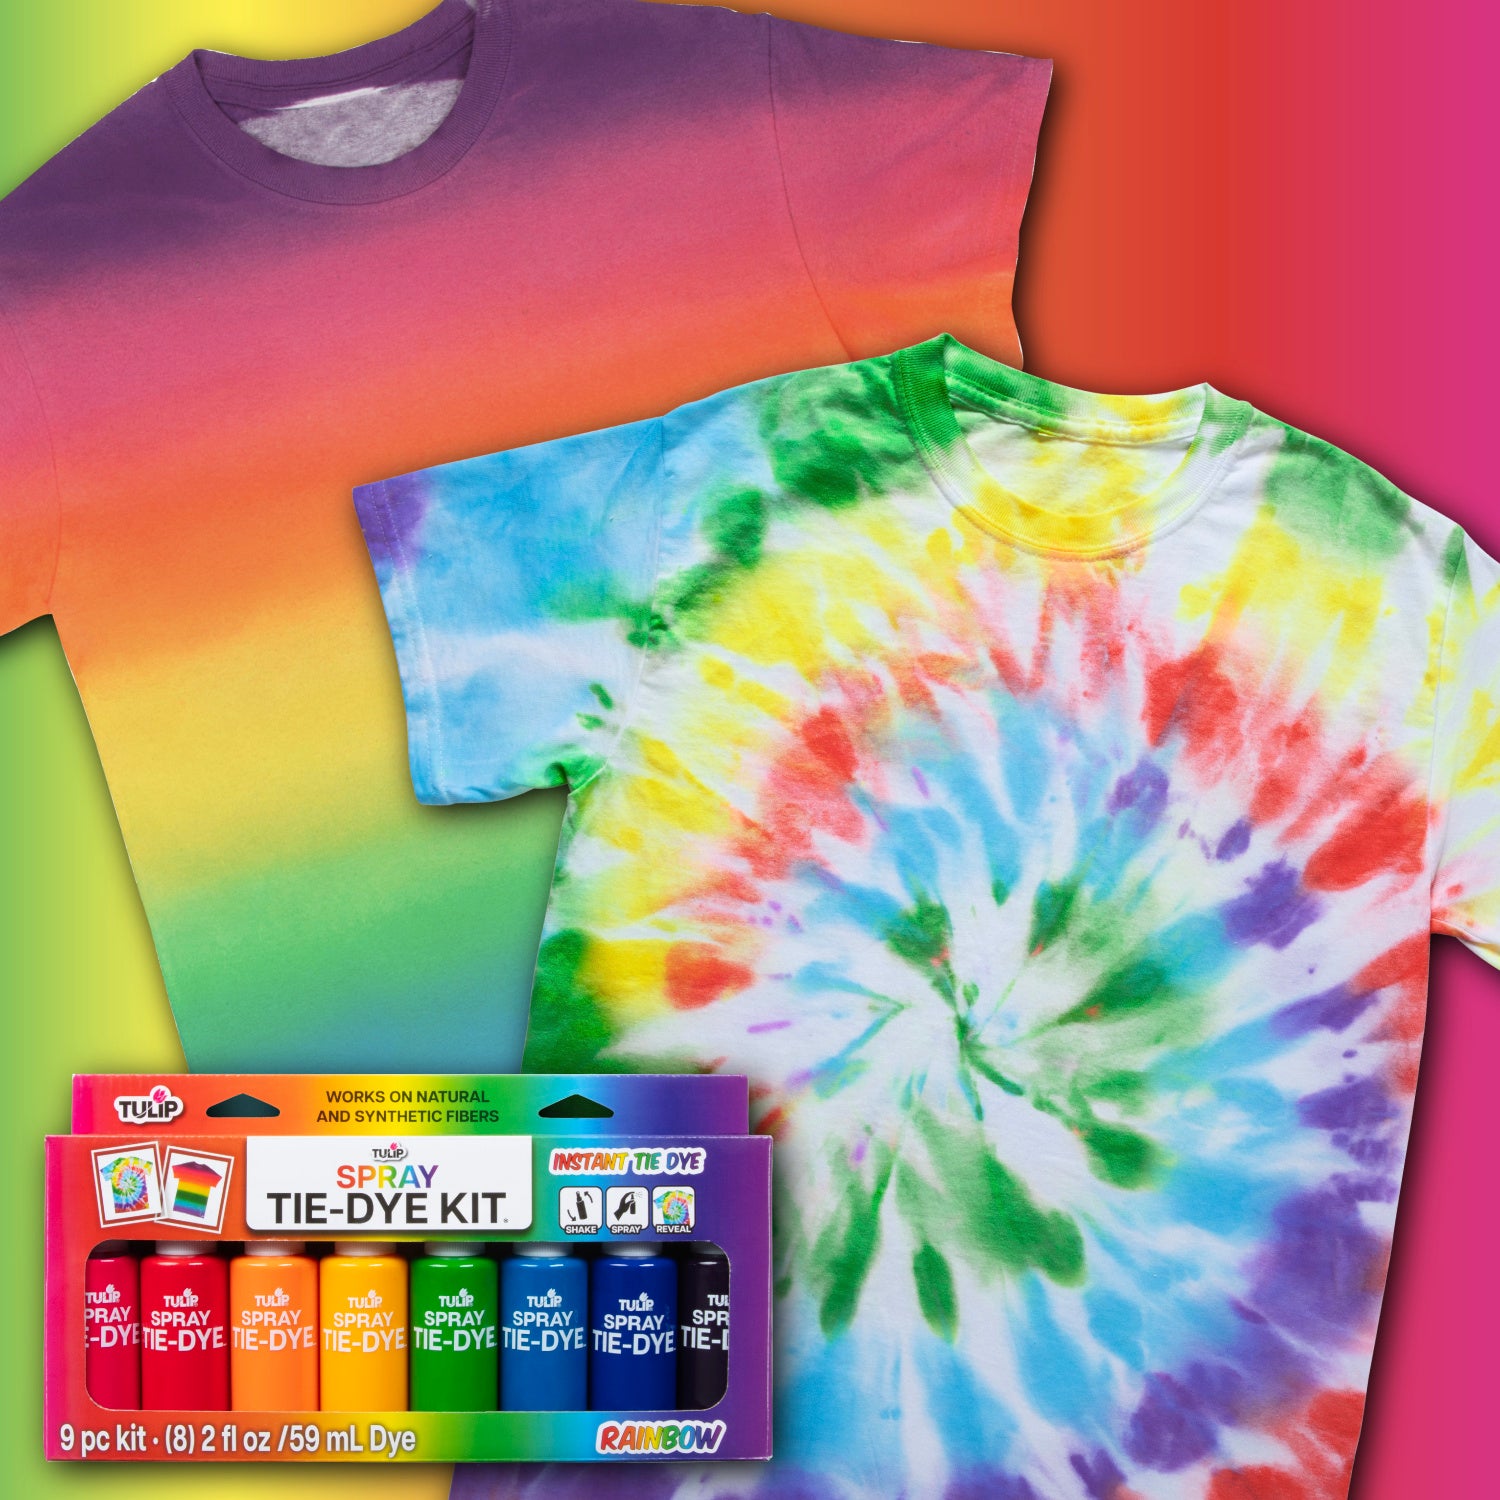 Simple spray dye designs with Tulip Spray Tie-Dye Kit